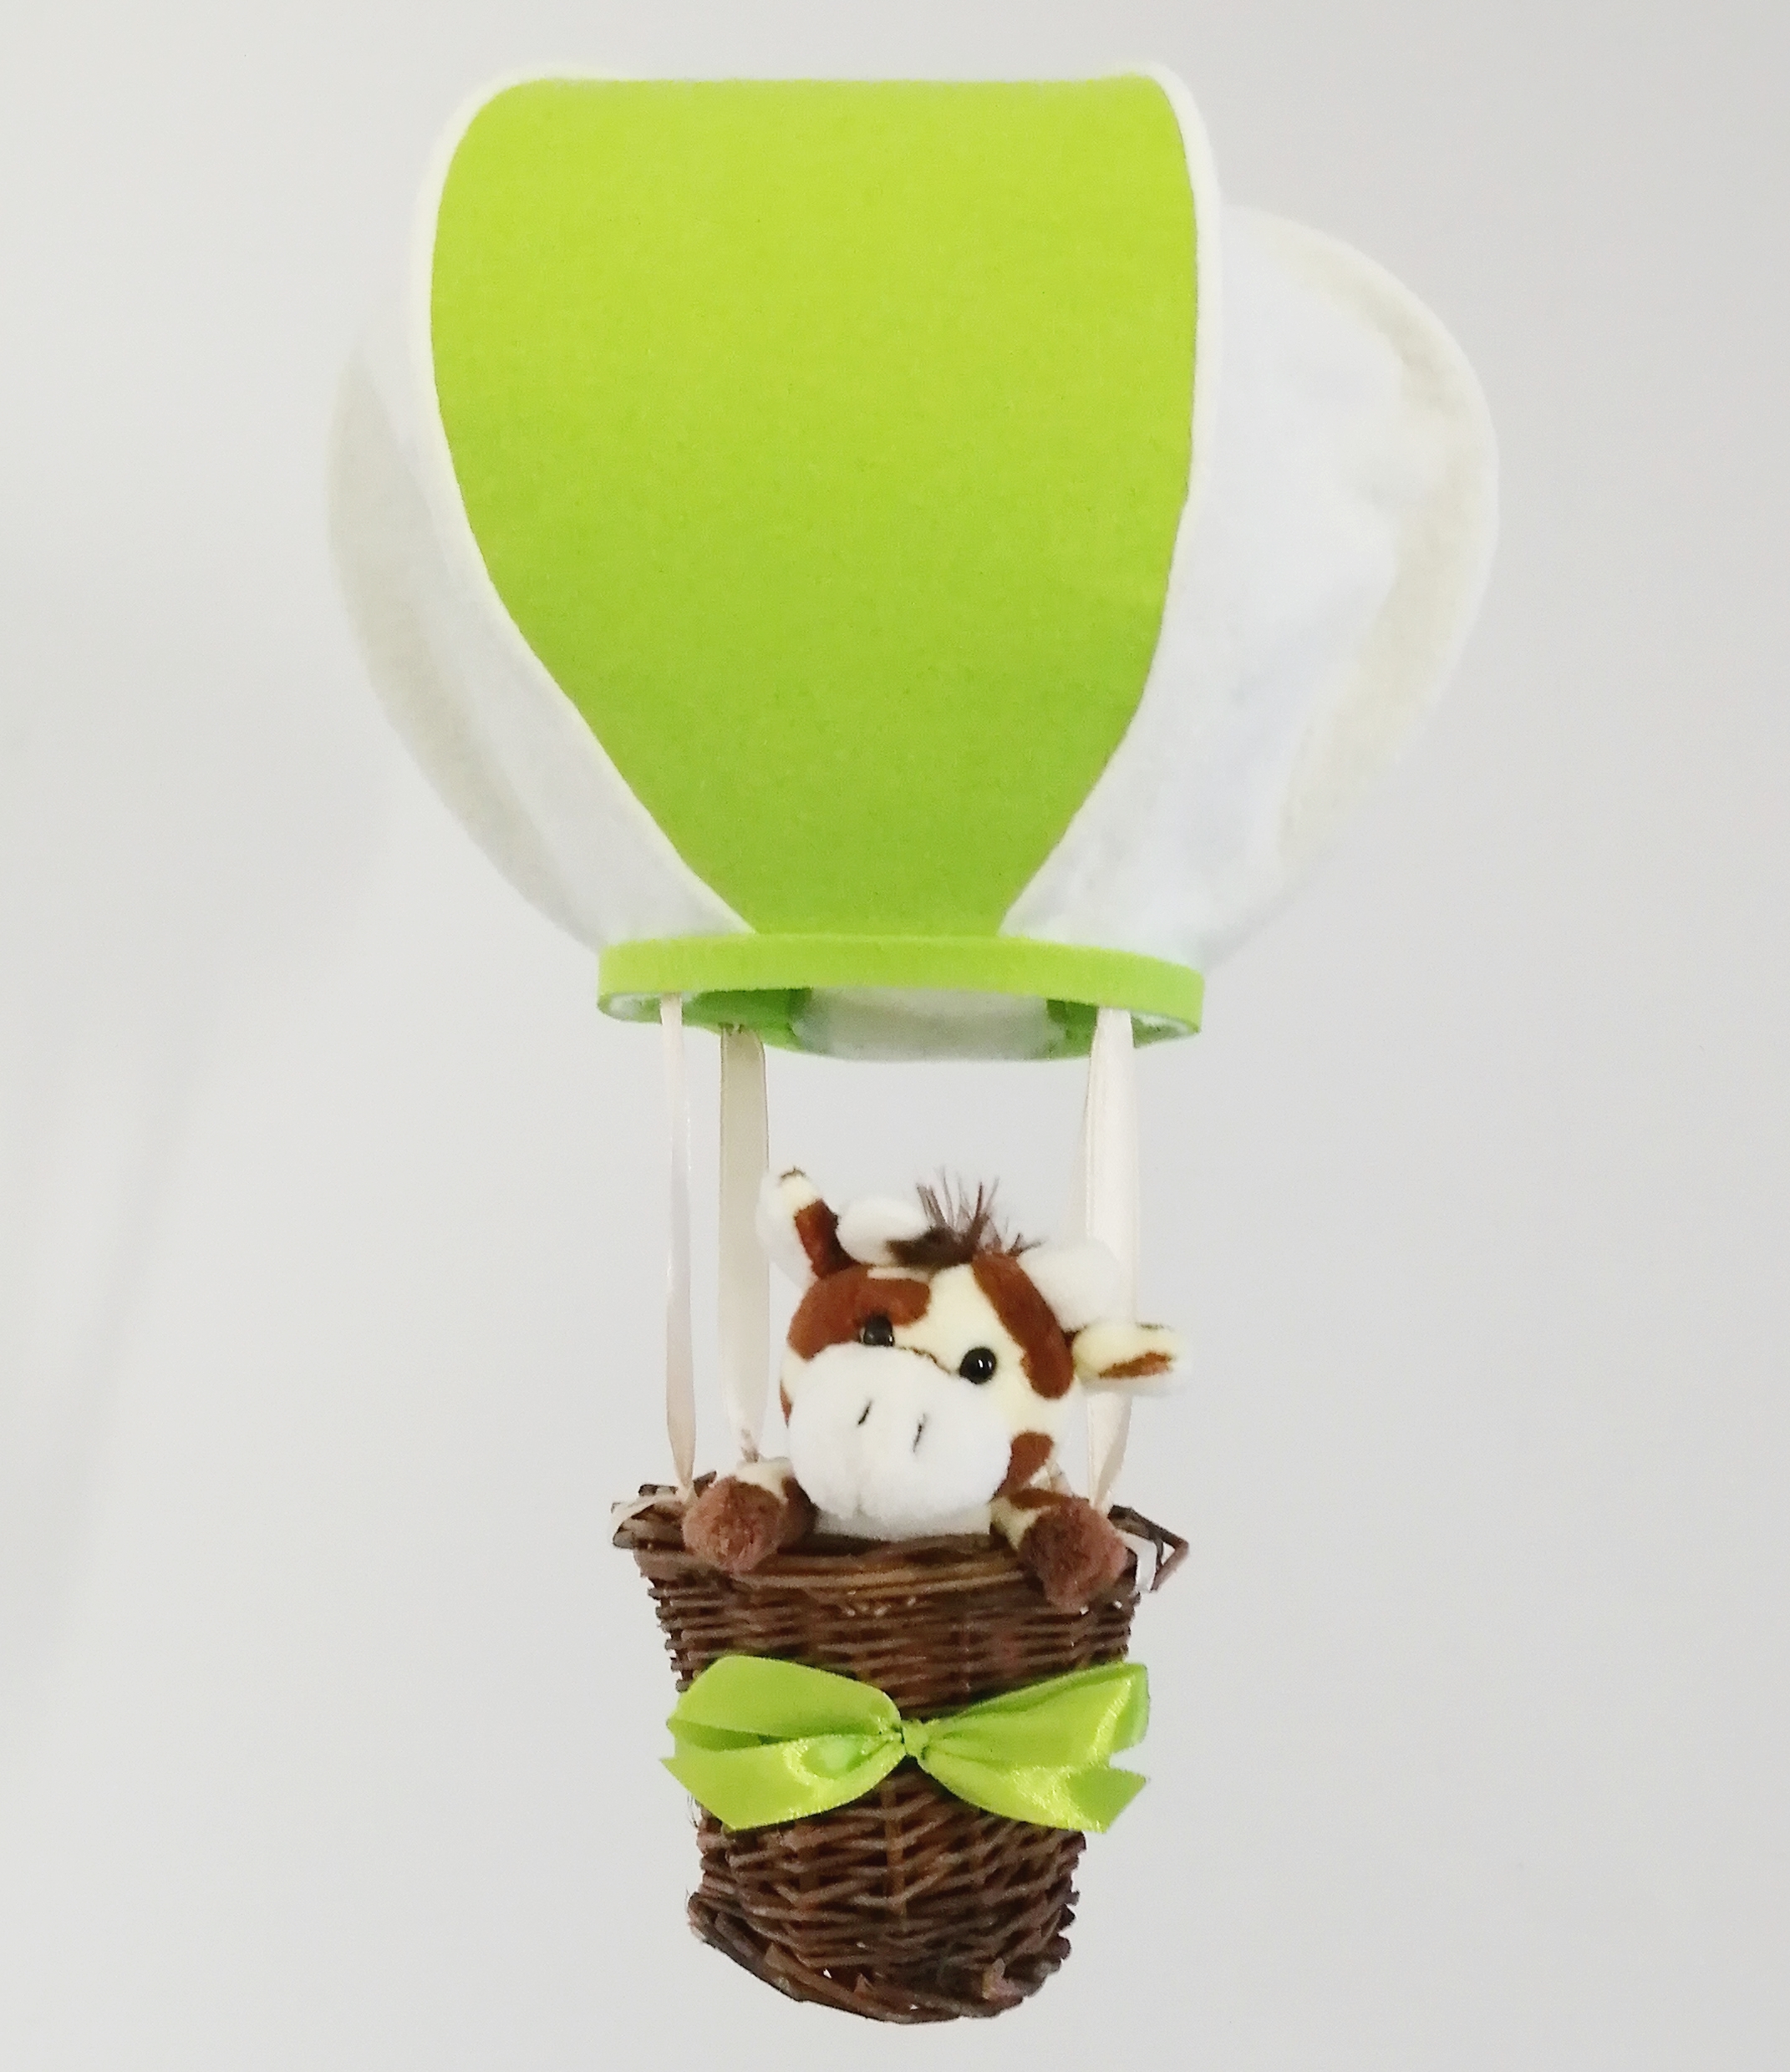 montgolfiere-decorative-jungle-safari-girafe-enfant-bebe-suspension-mobile-vert anis-beige-mixte-chambre